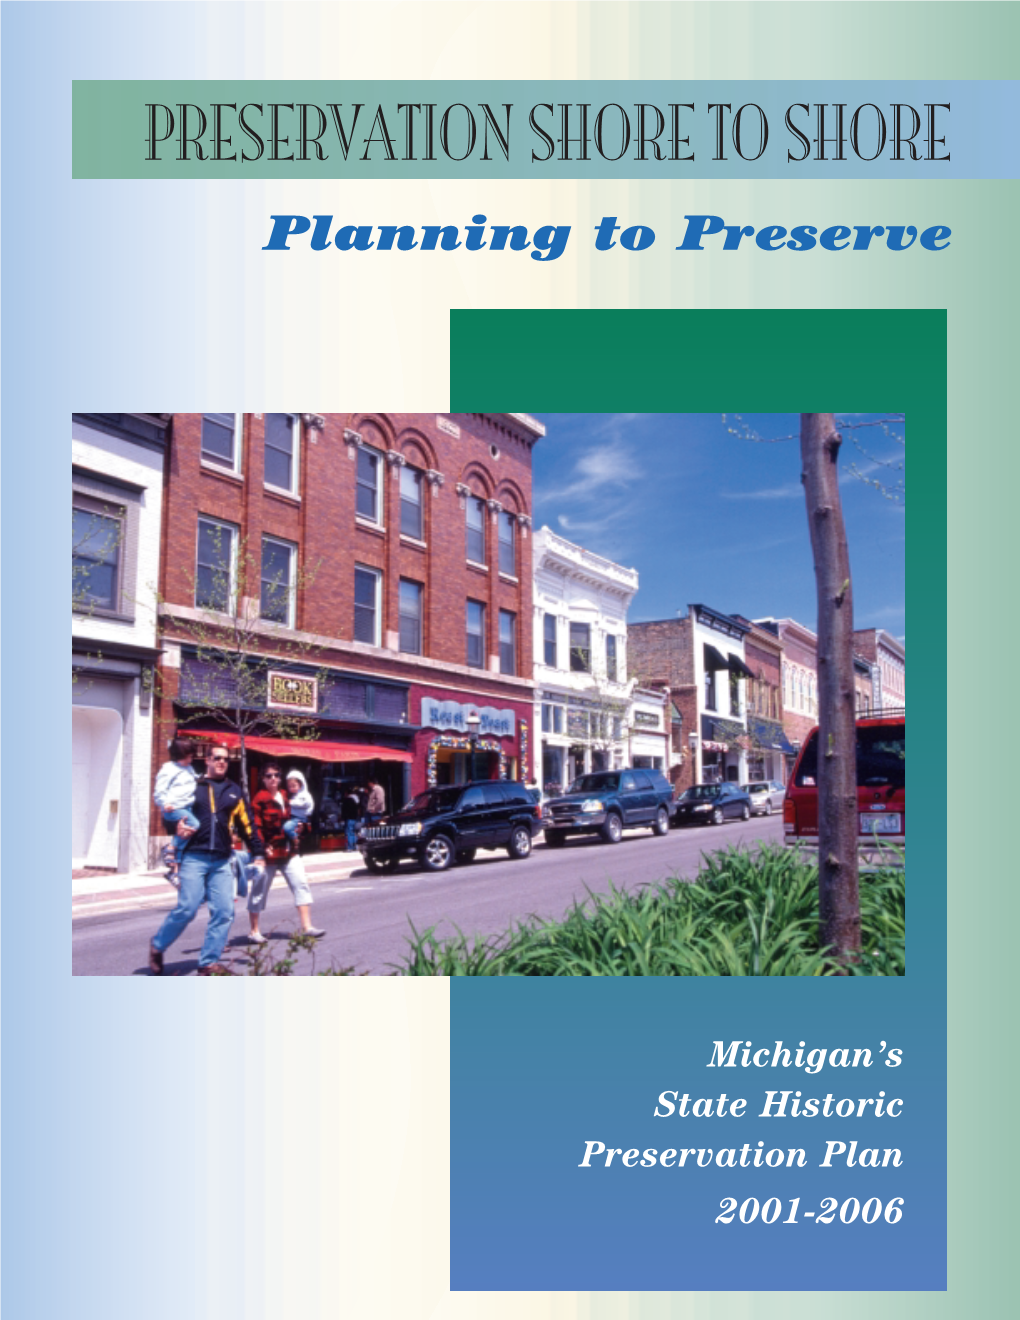 Michigan's State Historic Preservation Plan 2001-2006